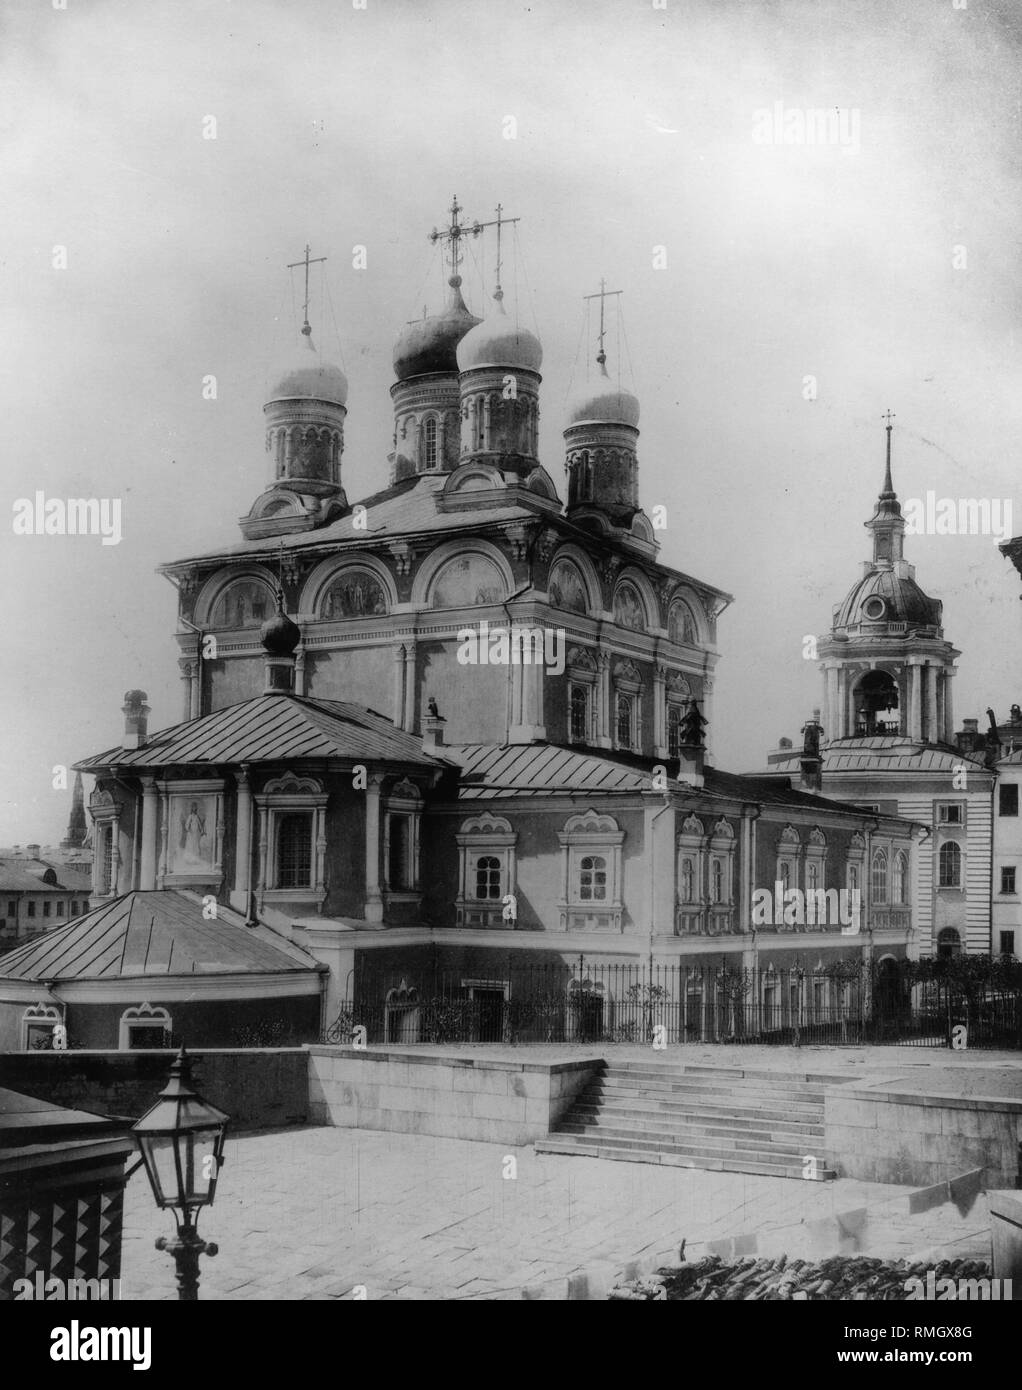 The Znamensky Monastery in Moscow. Albumin Photo Stock Photo - Alamy